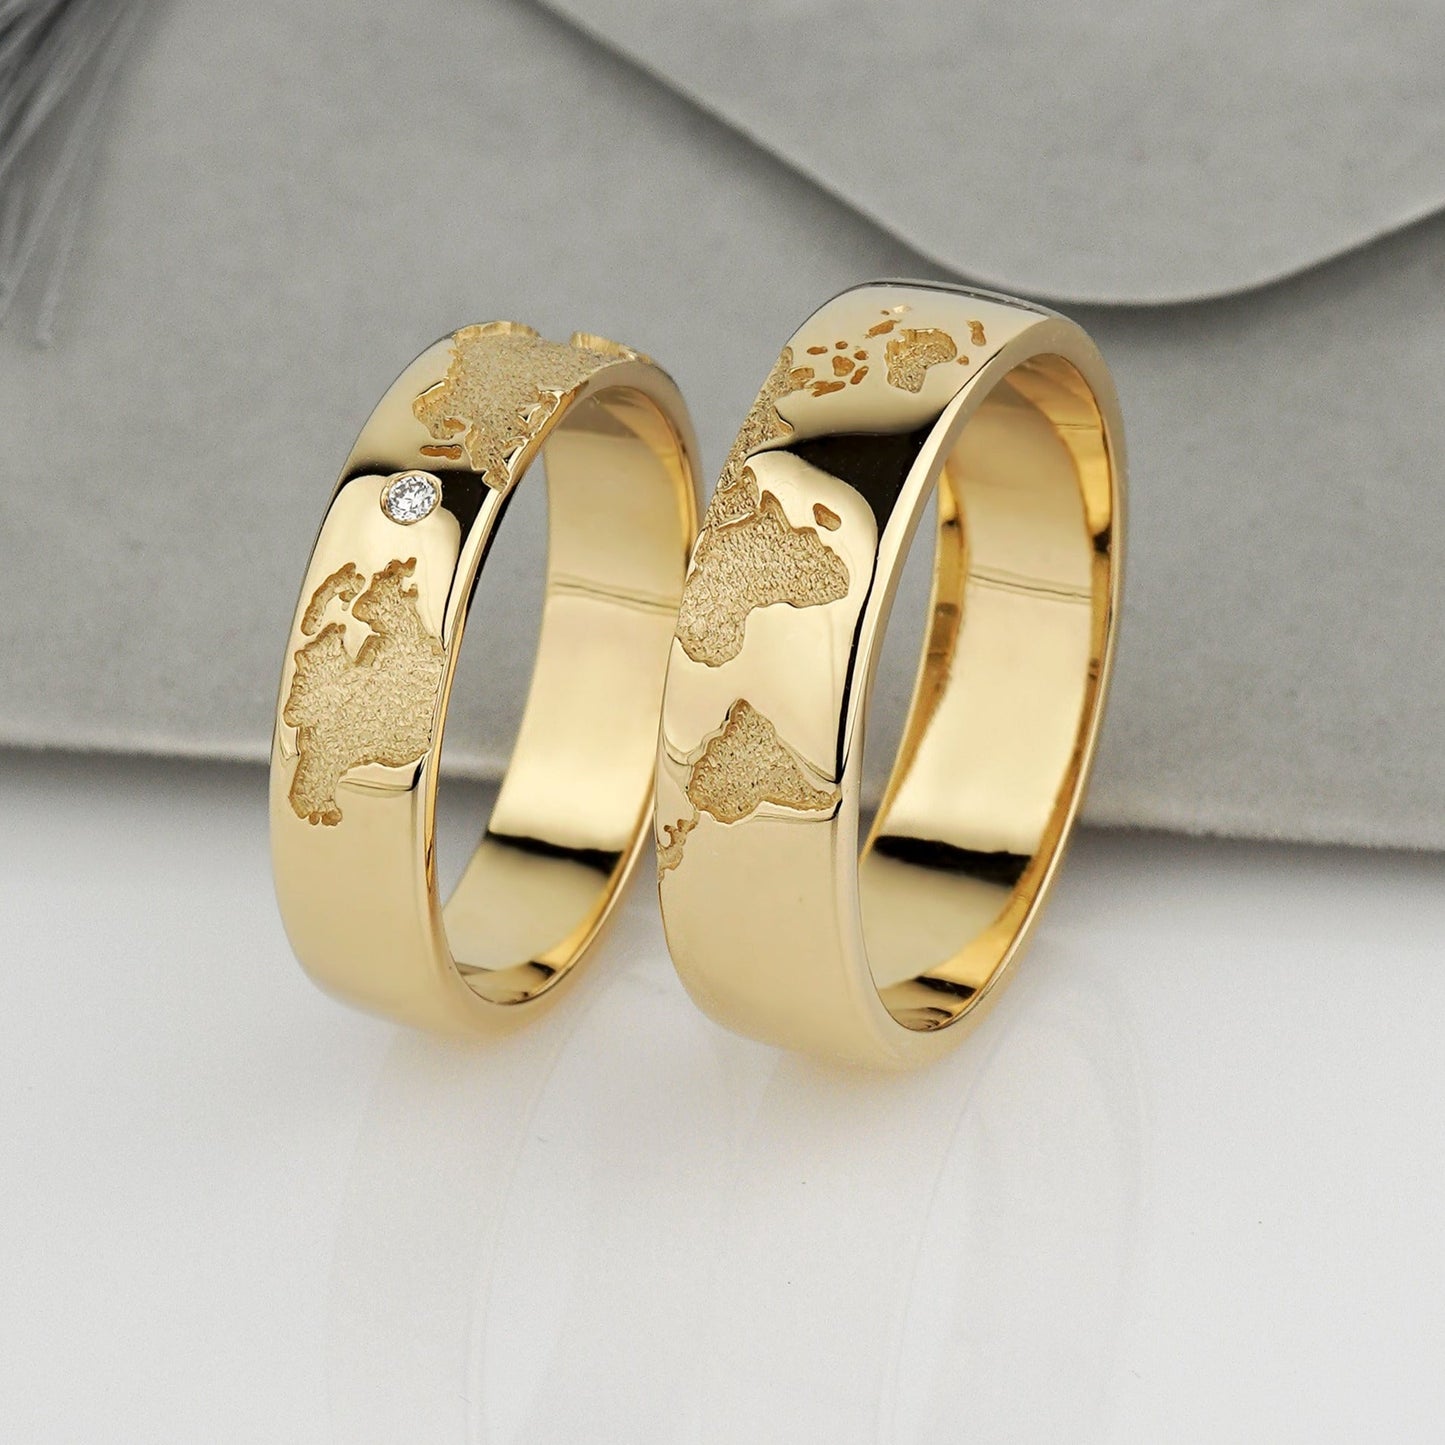 Gold wedding bands set with world map - escorialjewelry